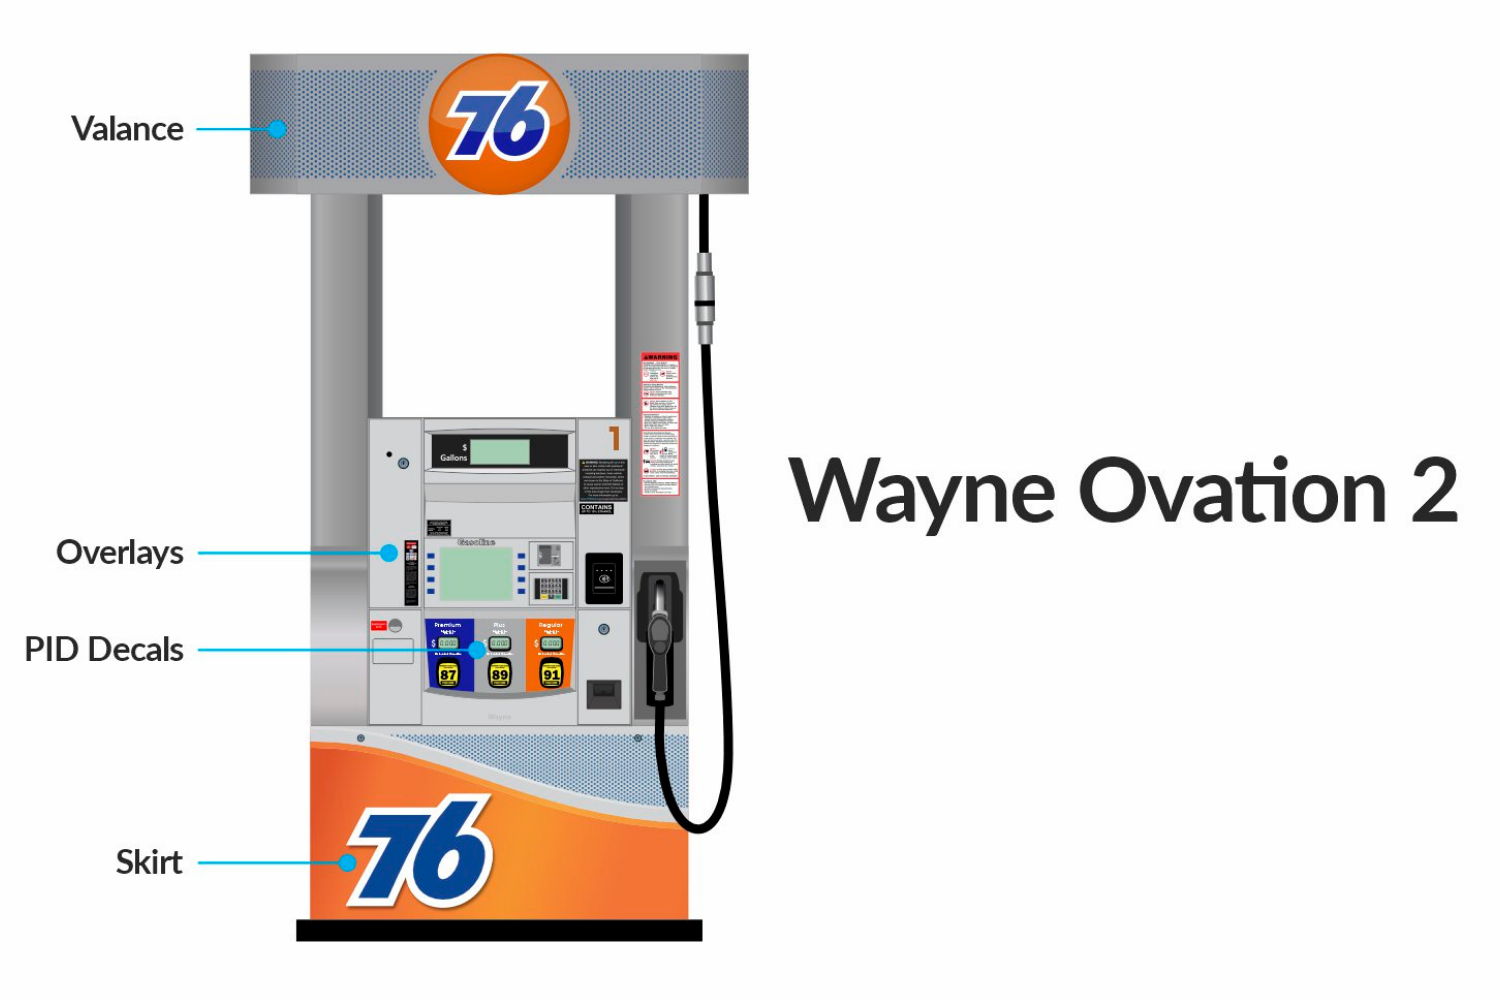 76 Gilbarco Wayne Ovation 2 Dispenser Model